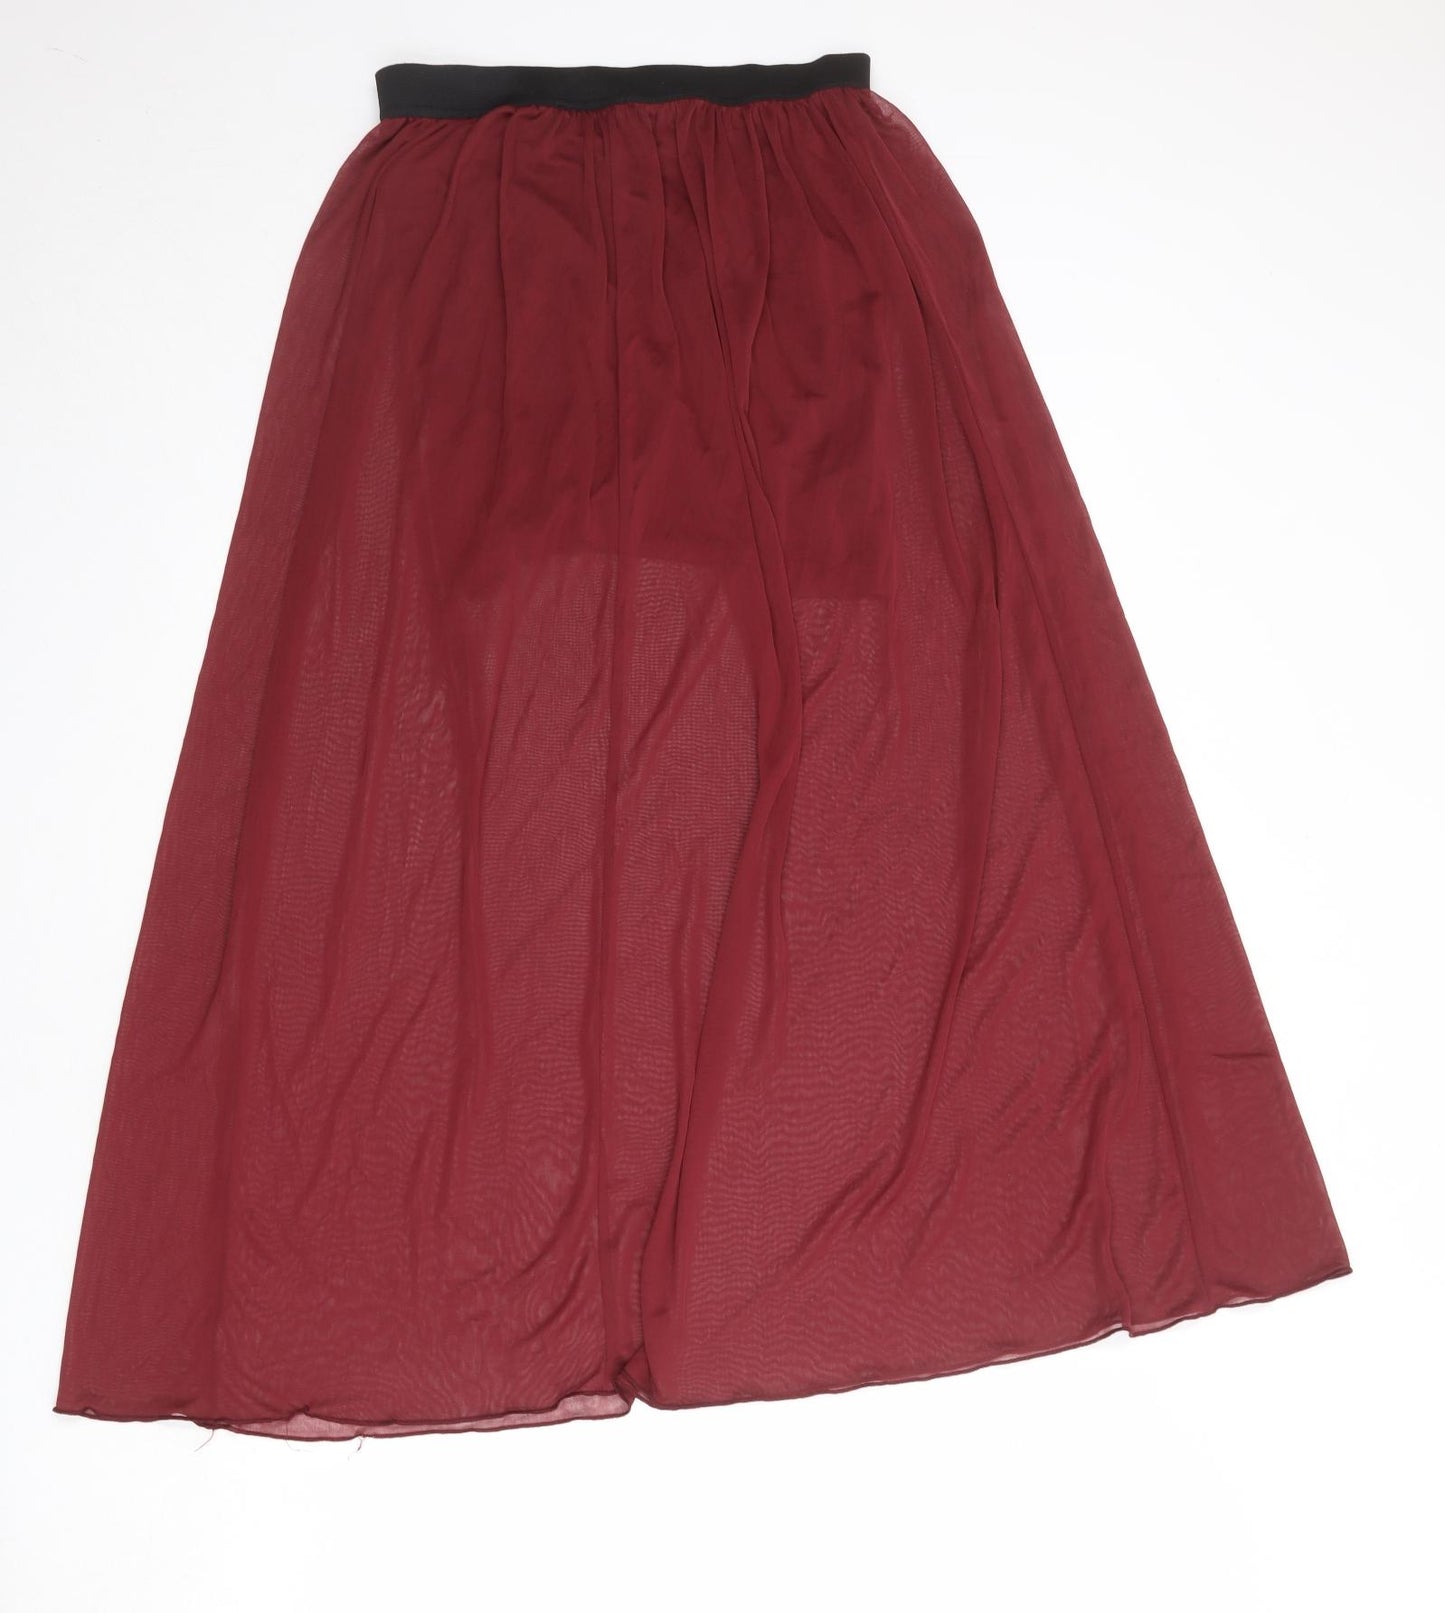 Miss Selfridge Womens Red Polyester Peasant Skirt Size 12 - Sheer overlay